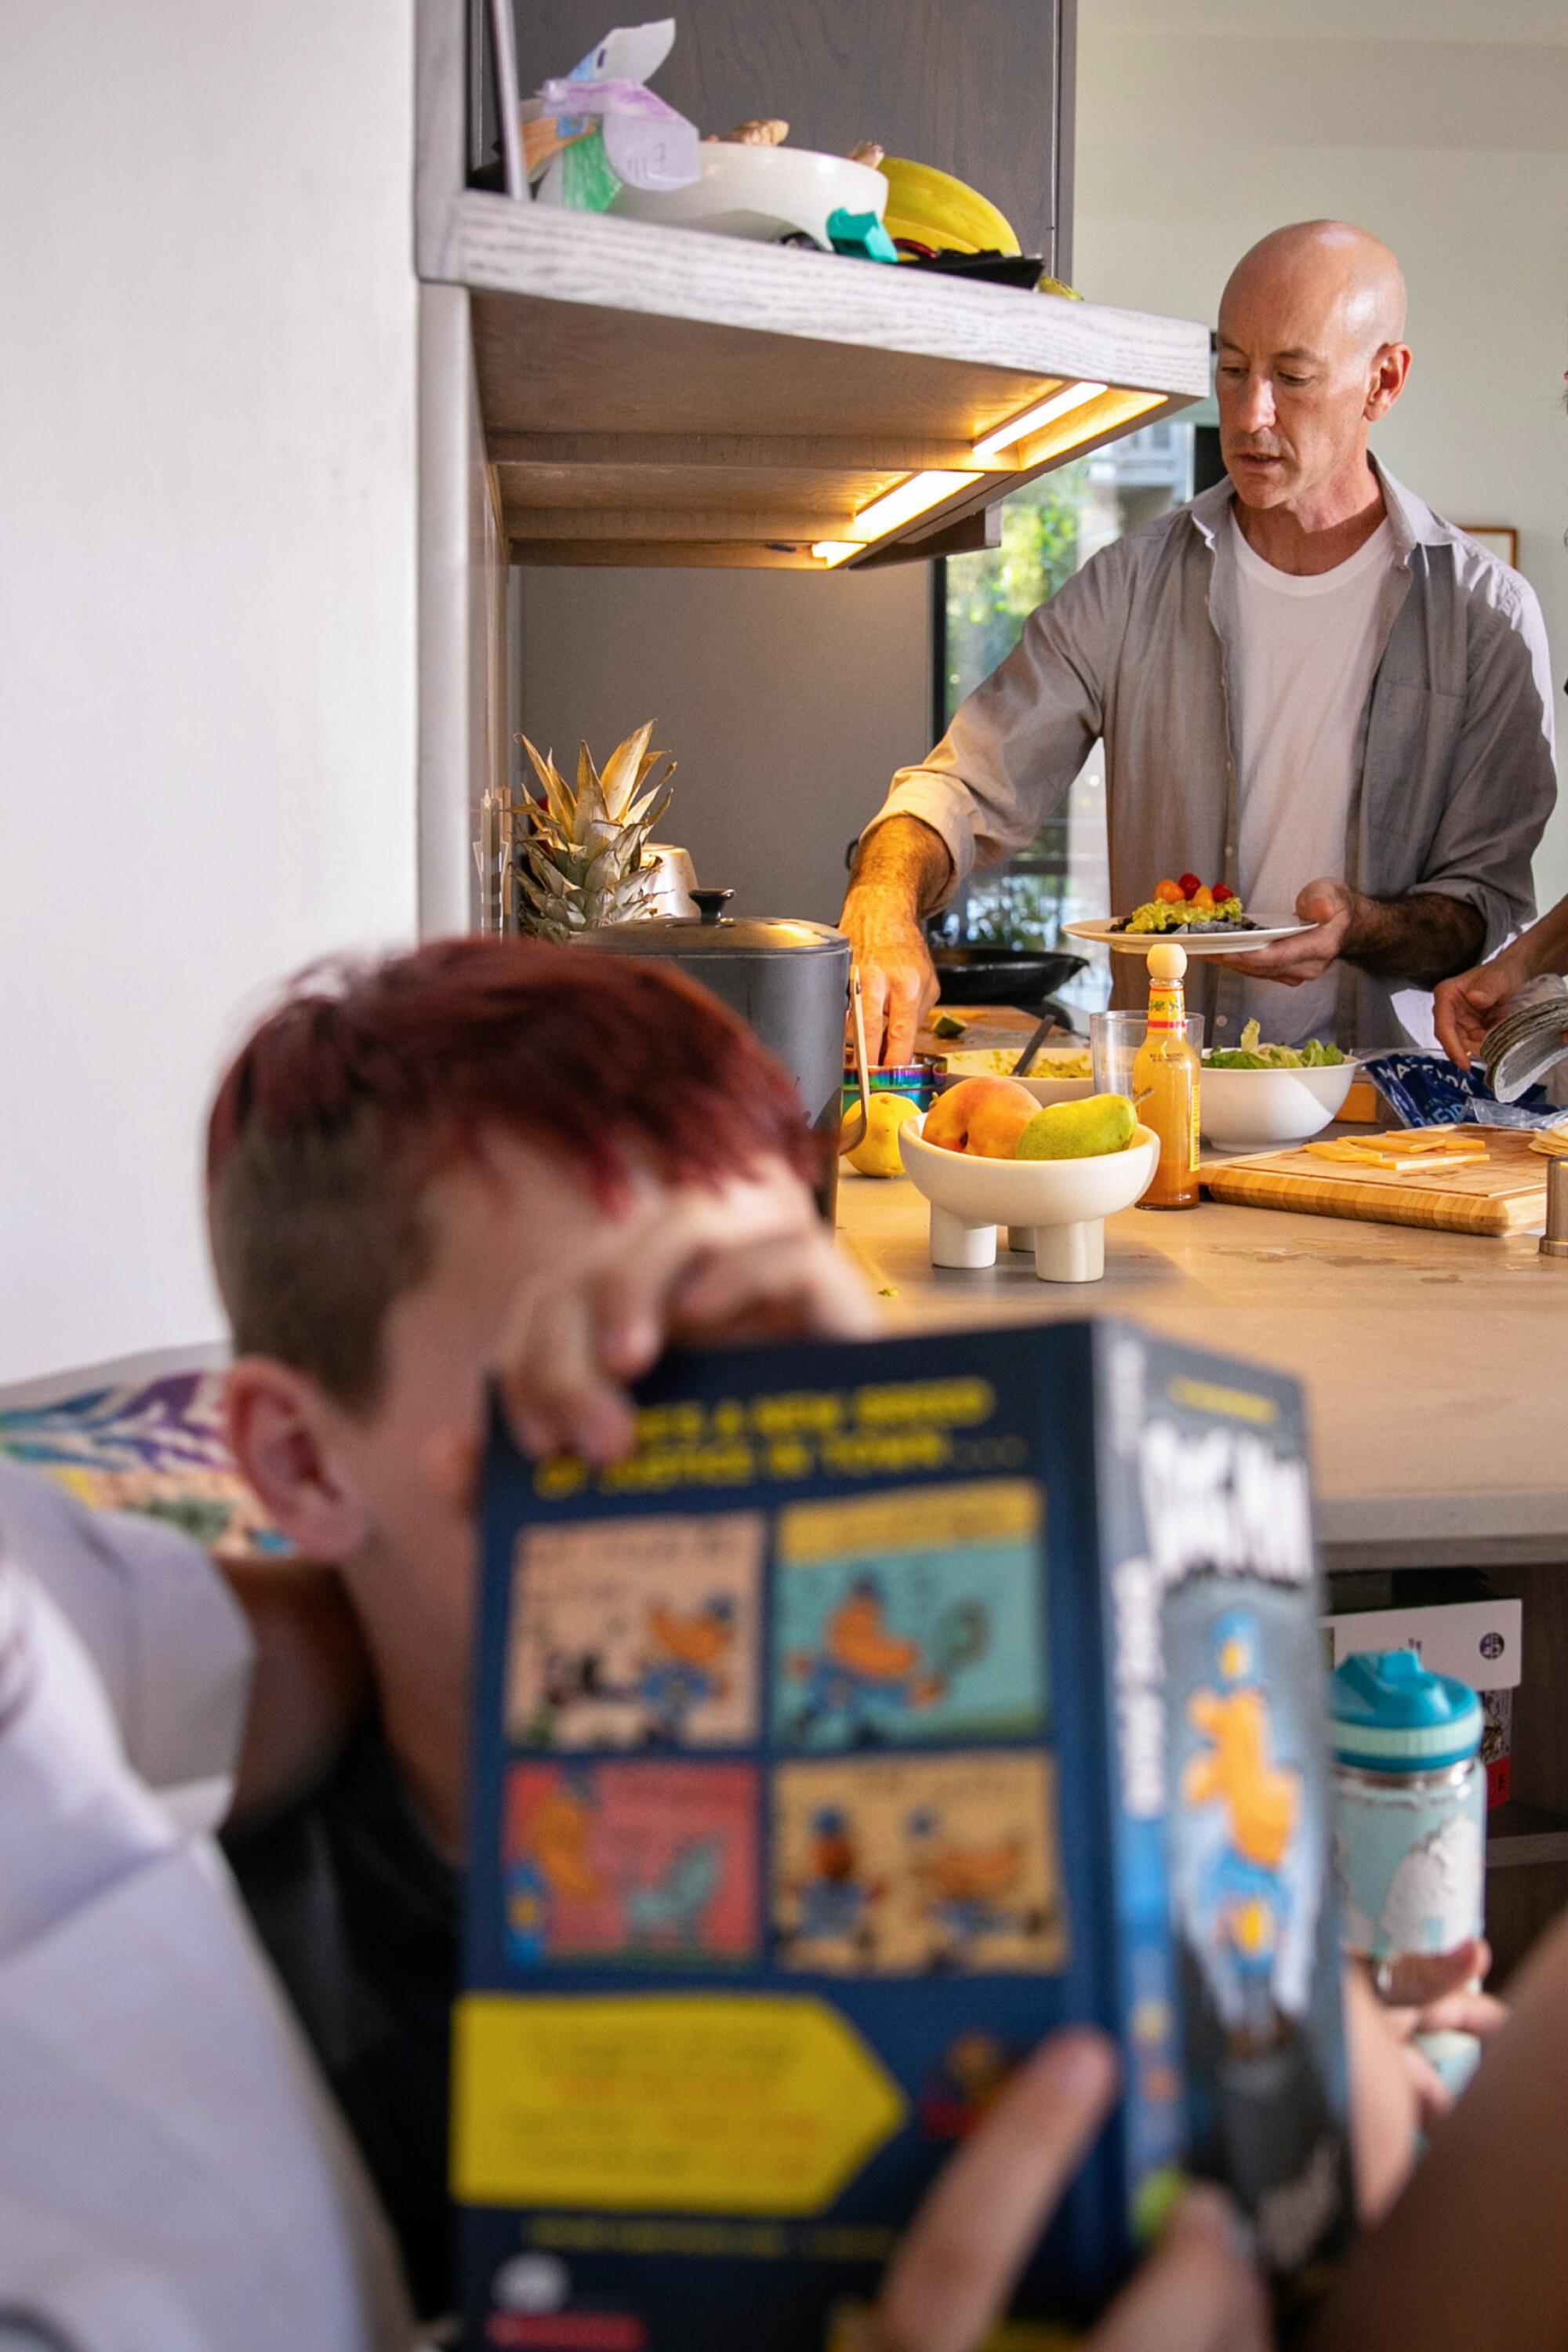 Un uomo prepara la cena in cucina mentre un bambino legge in un angolo vicino.